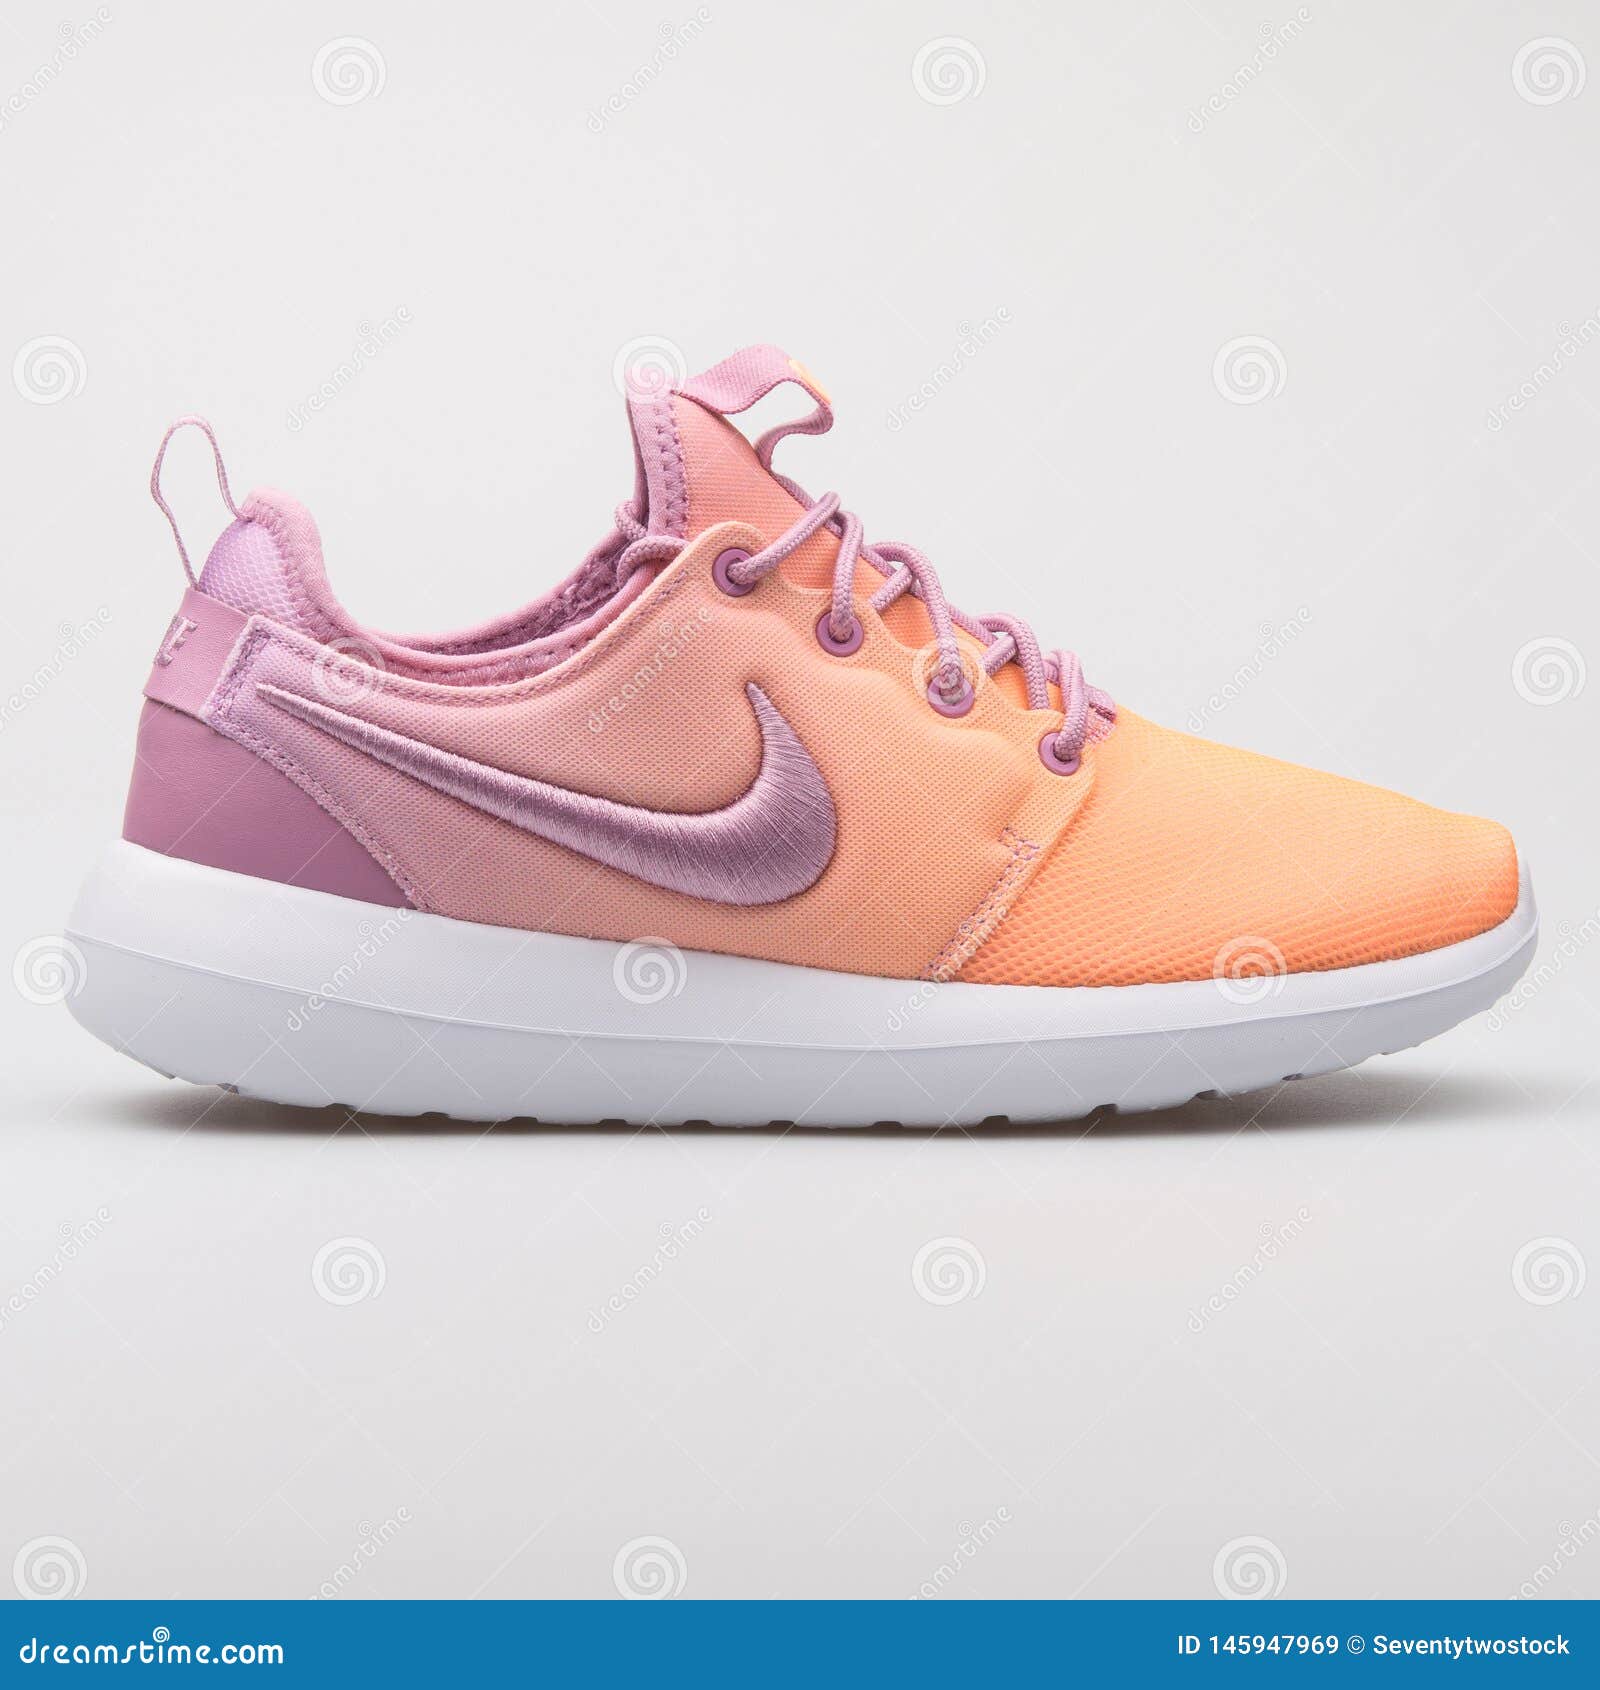 Nike Roshe Two BR Purple Orange Sneaker Editorial Stock Image - Image life, isolated: 145947969